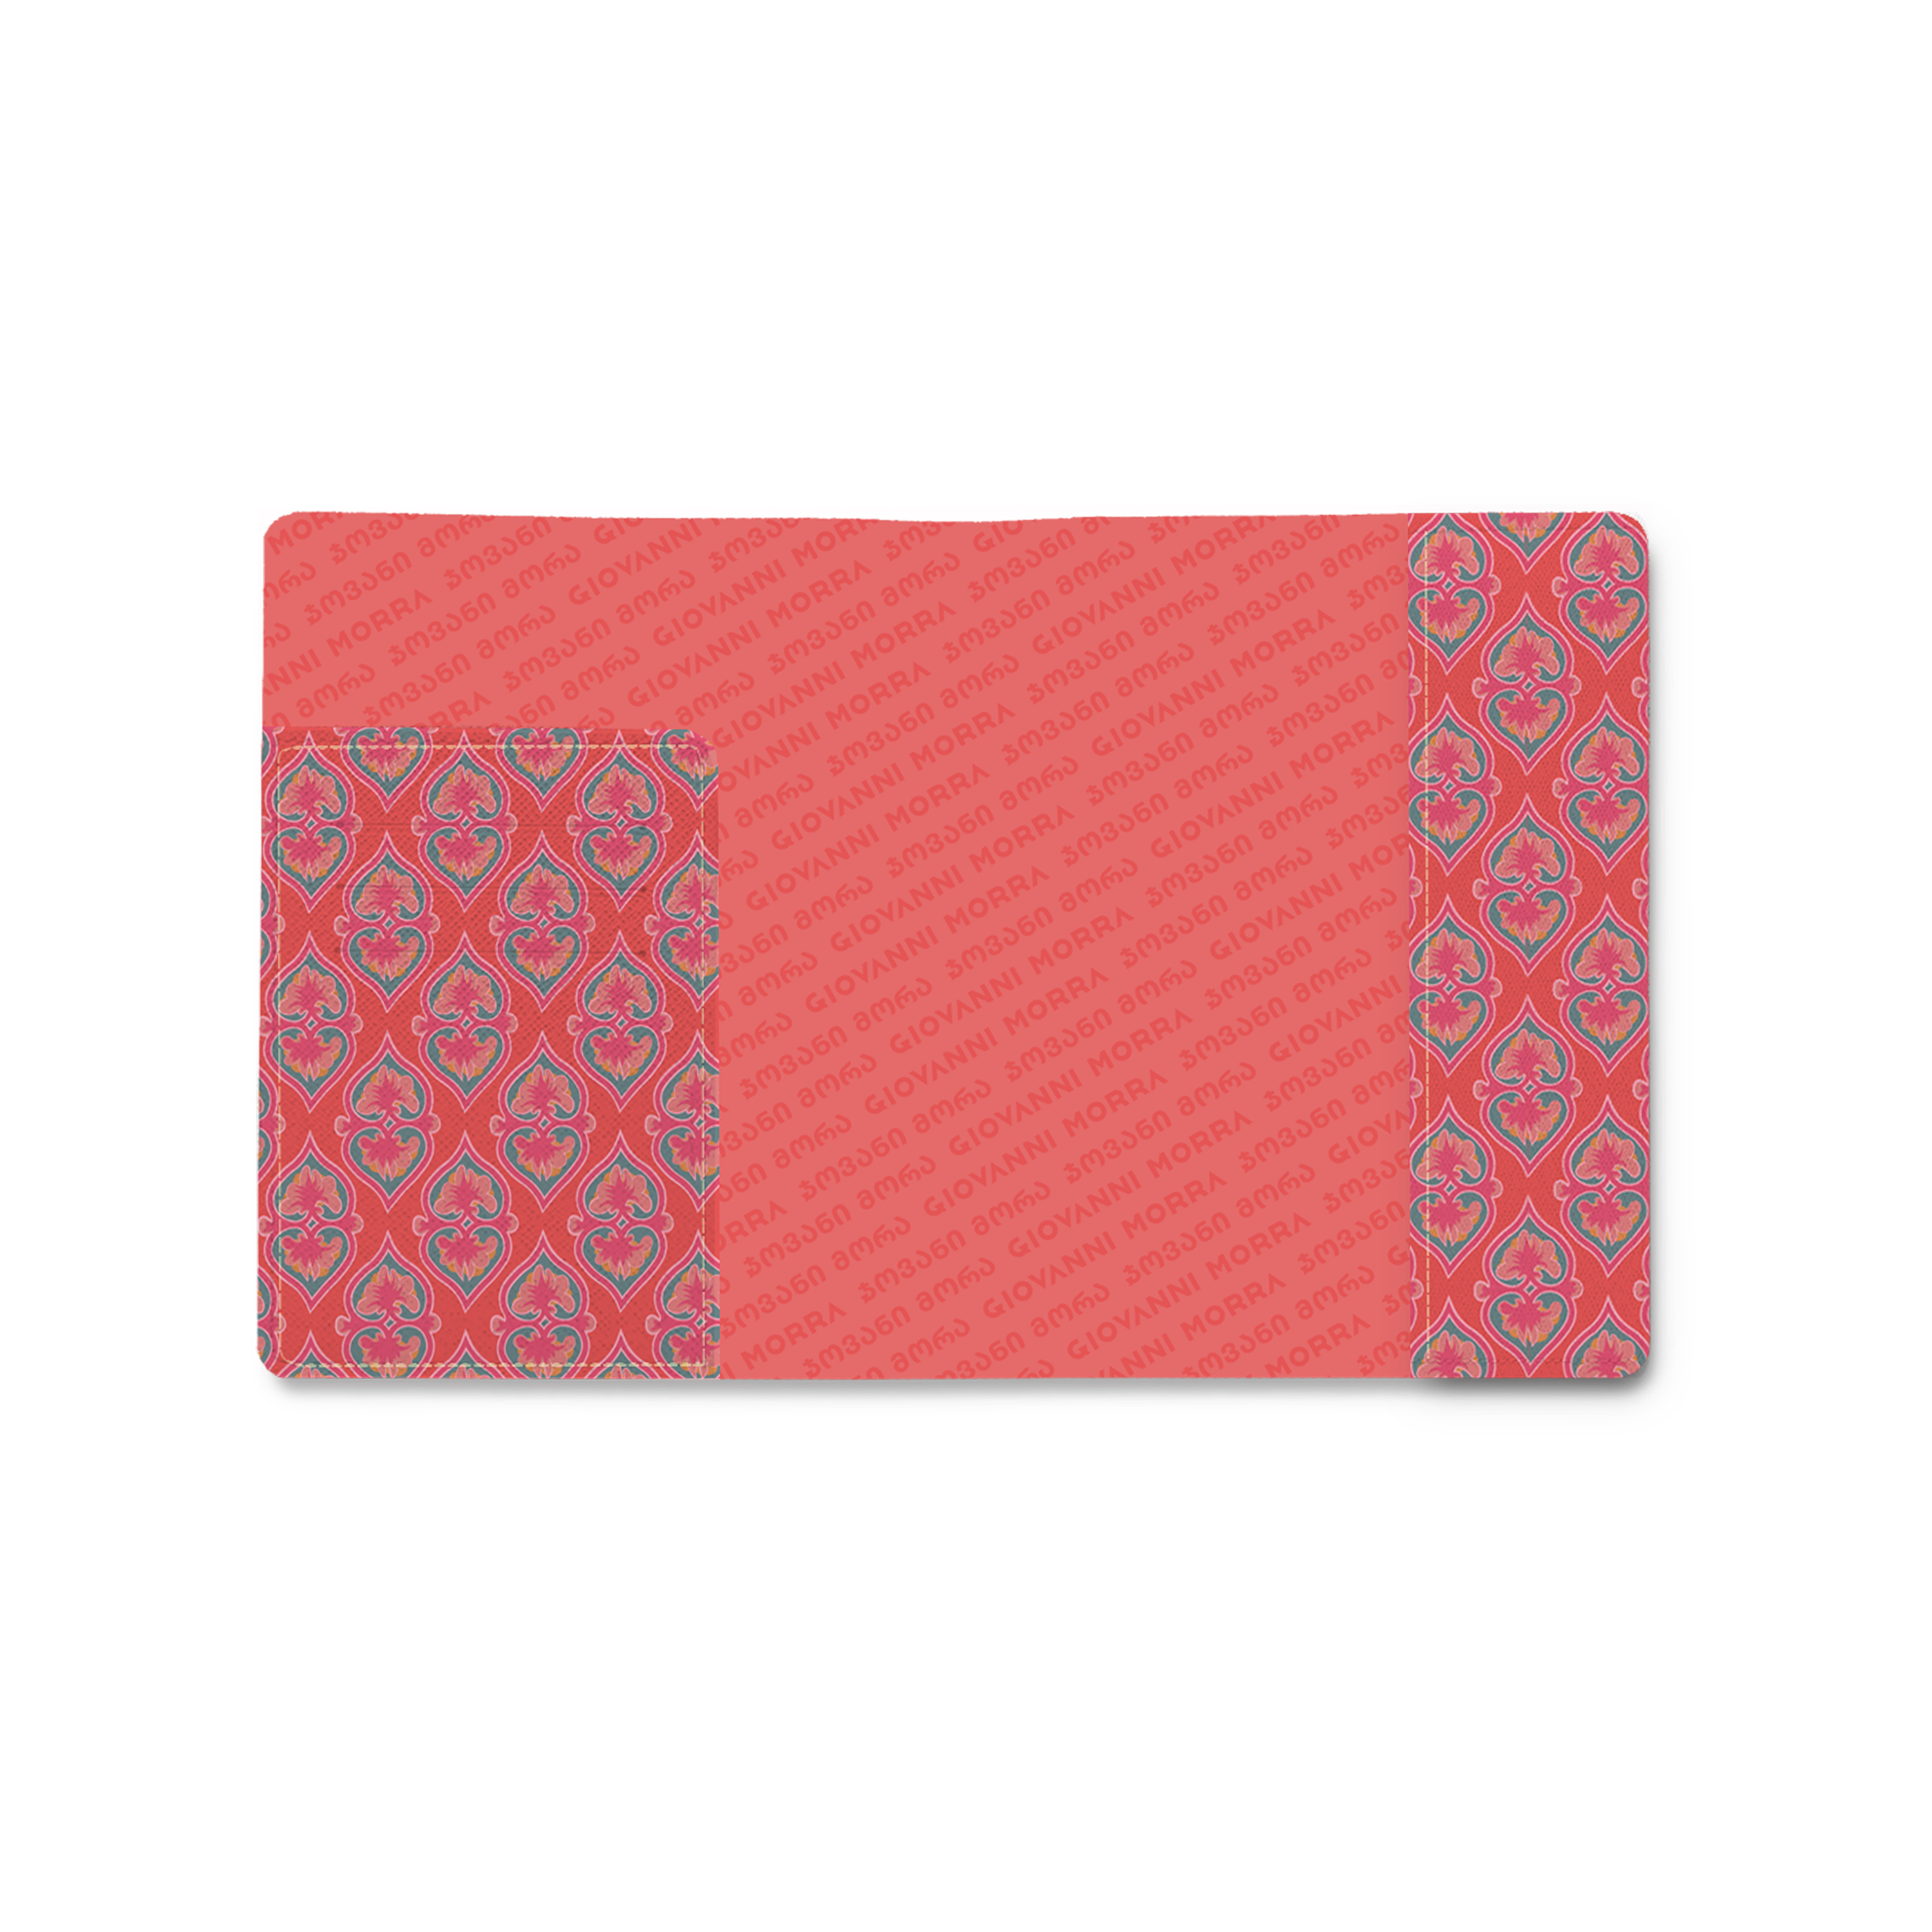 Gulisstsory (Sweetheart) Passport Cover (Pink)